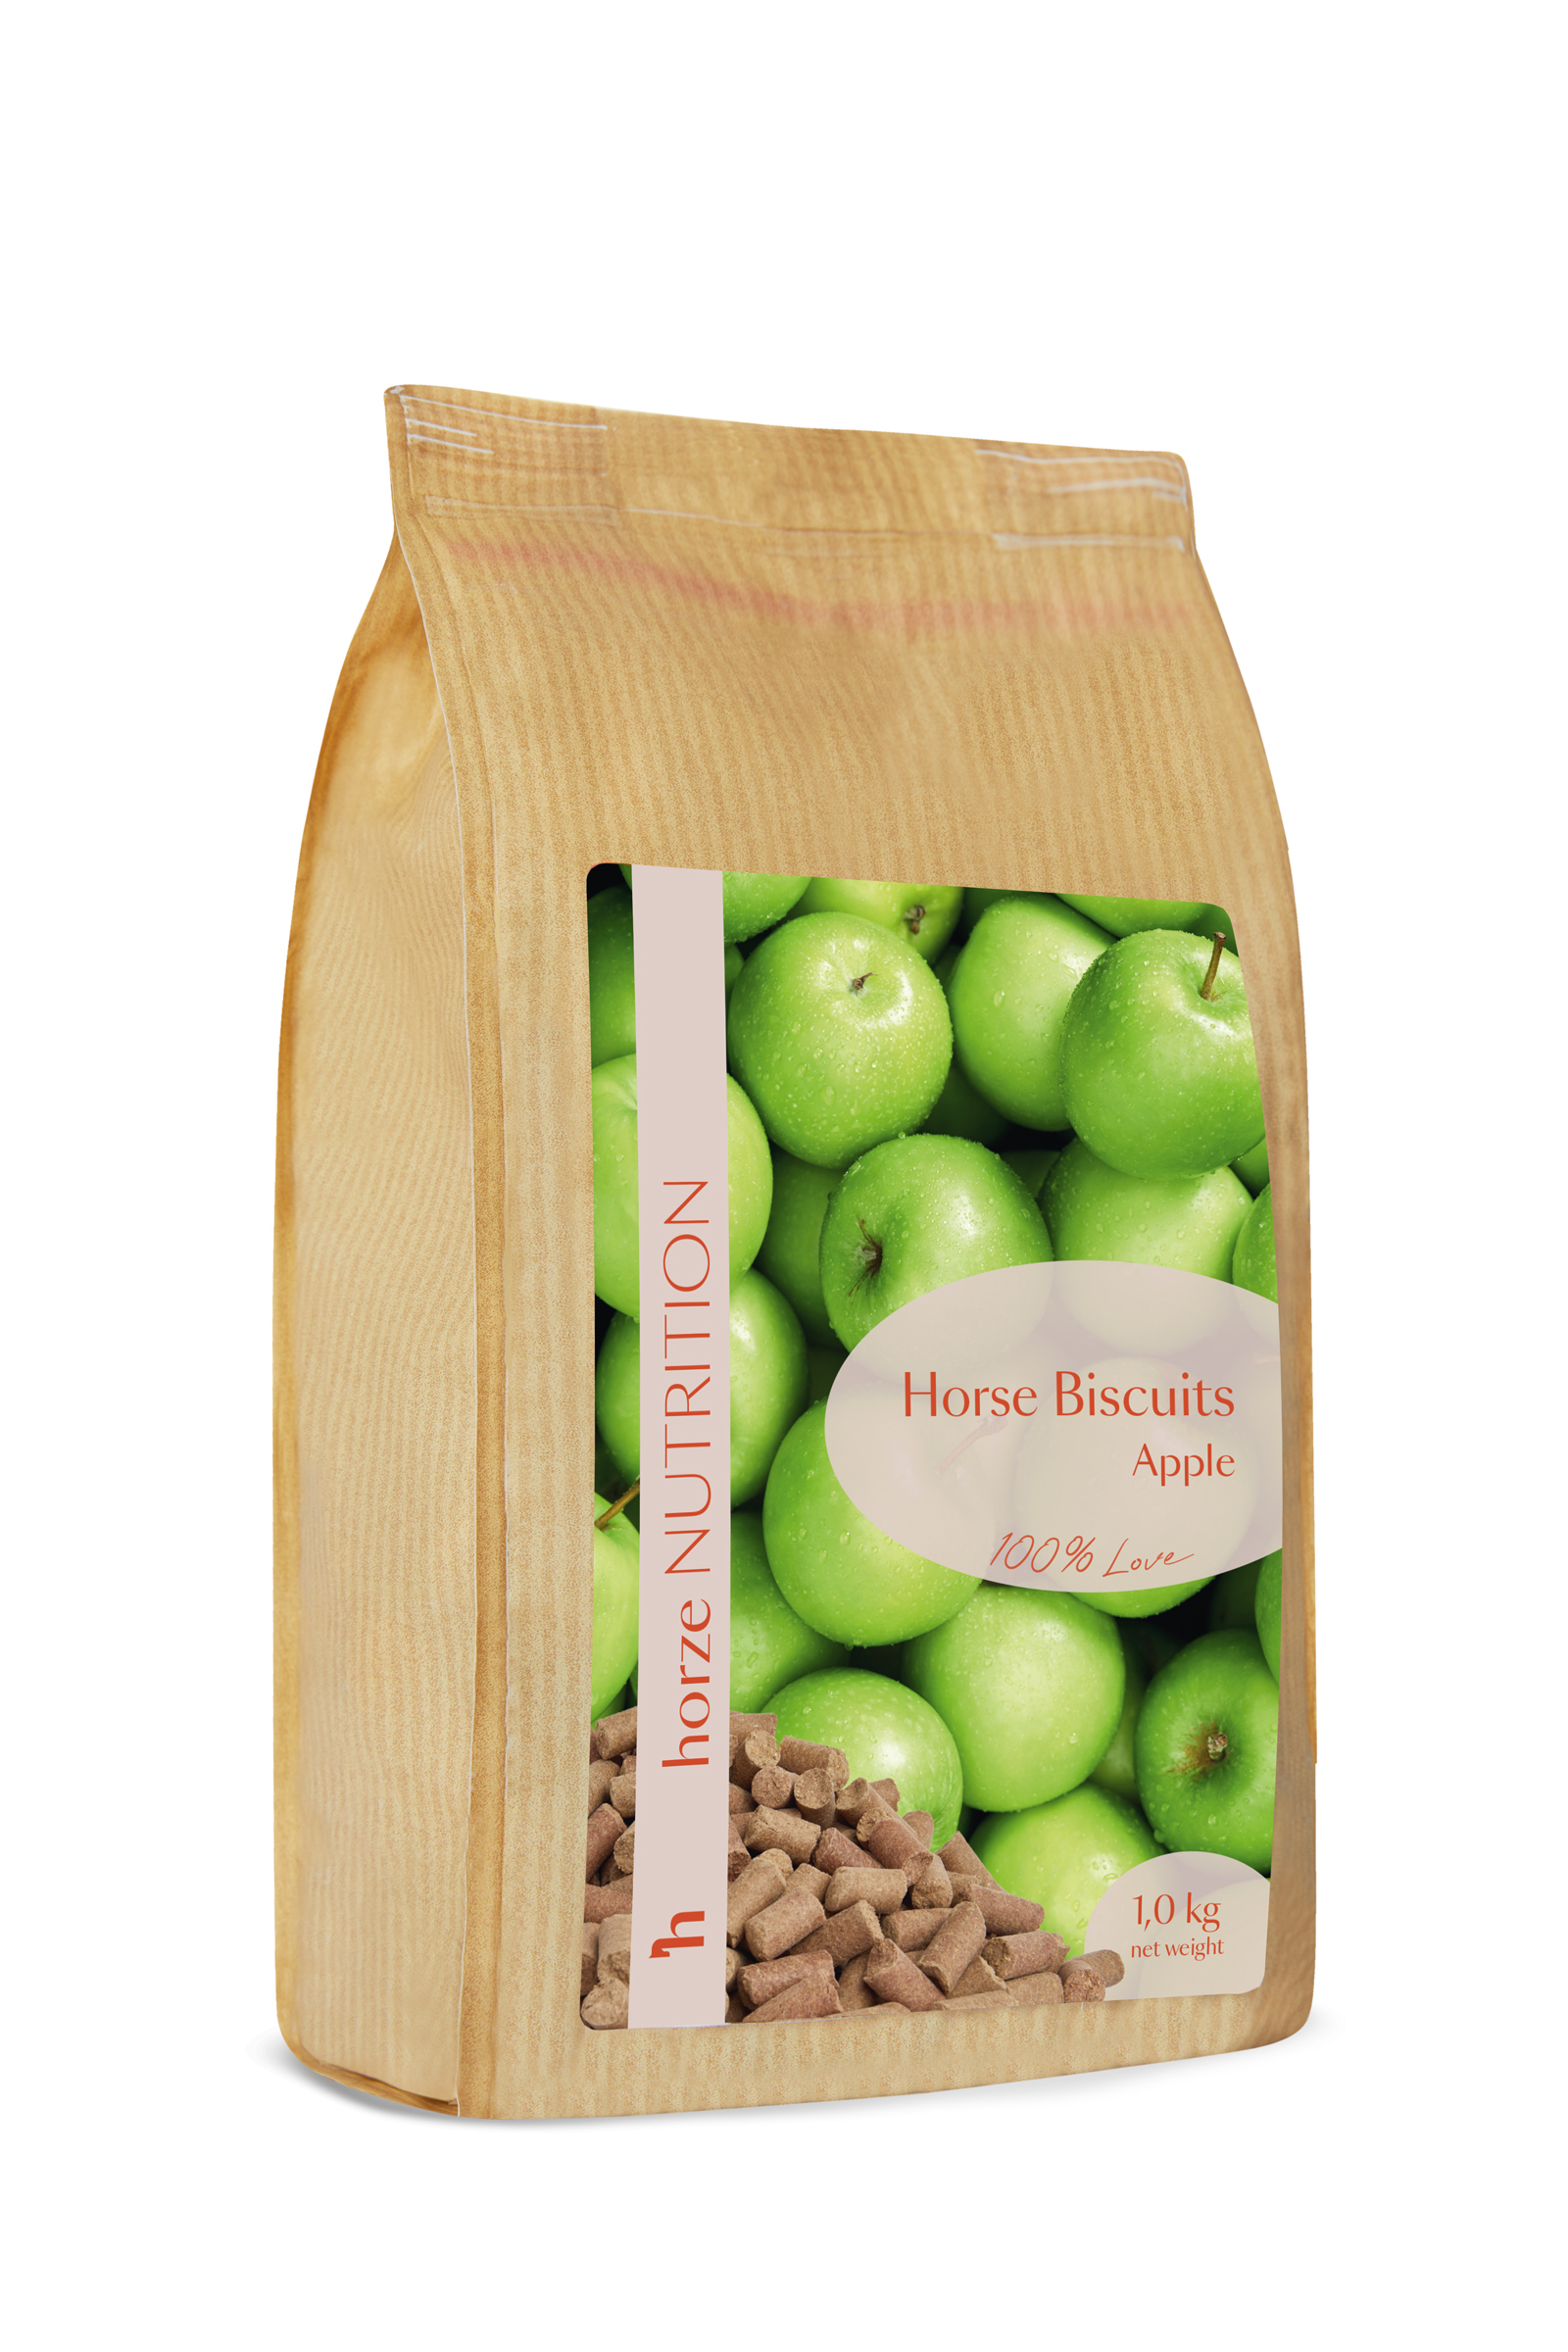 Acquista Horze Biscotti per cavalli alla mela, 1 kg ora